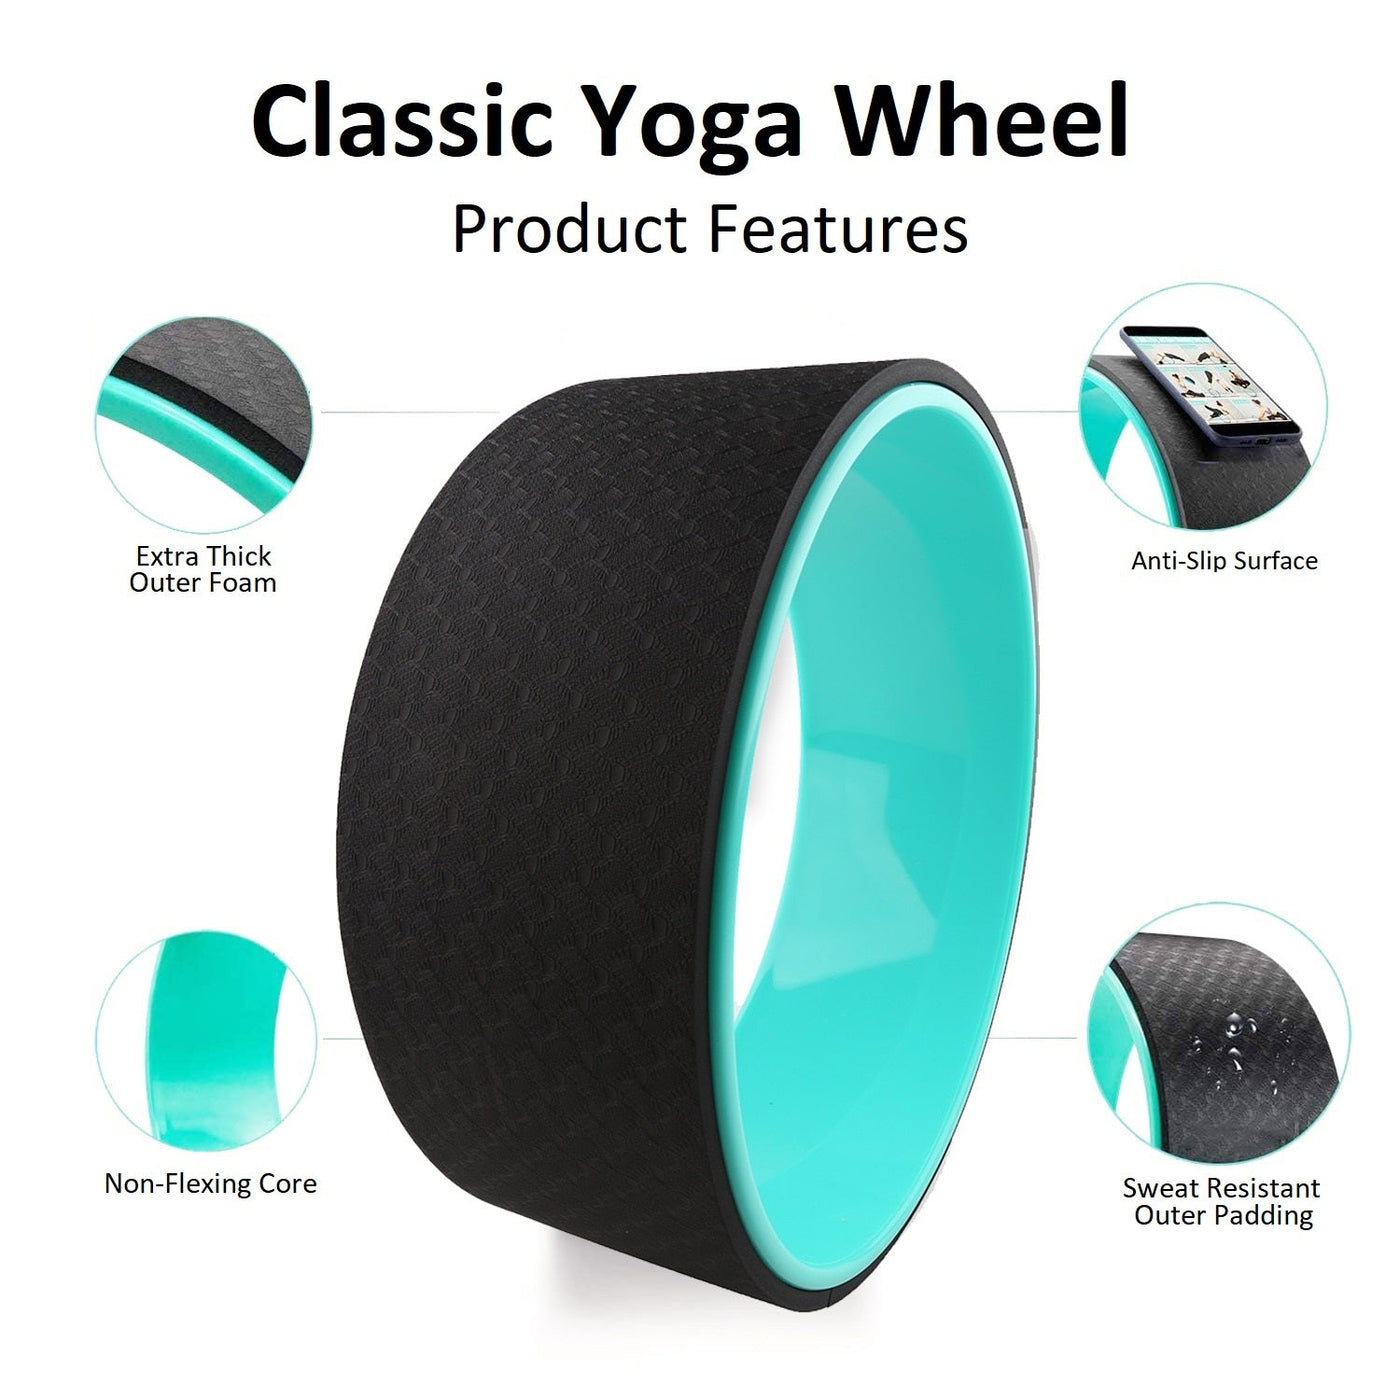 Classic Yoga Wheel